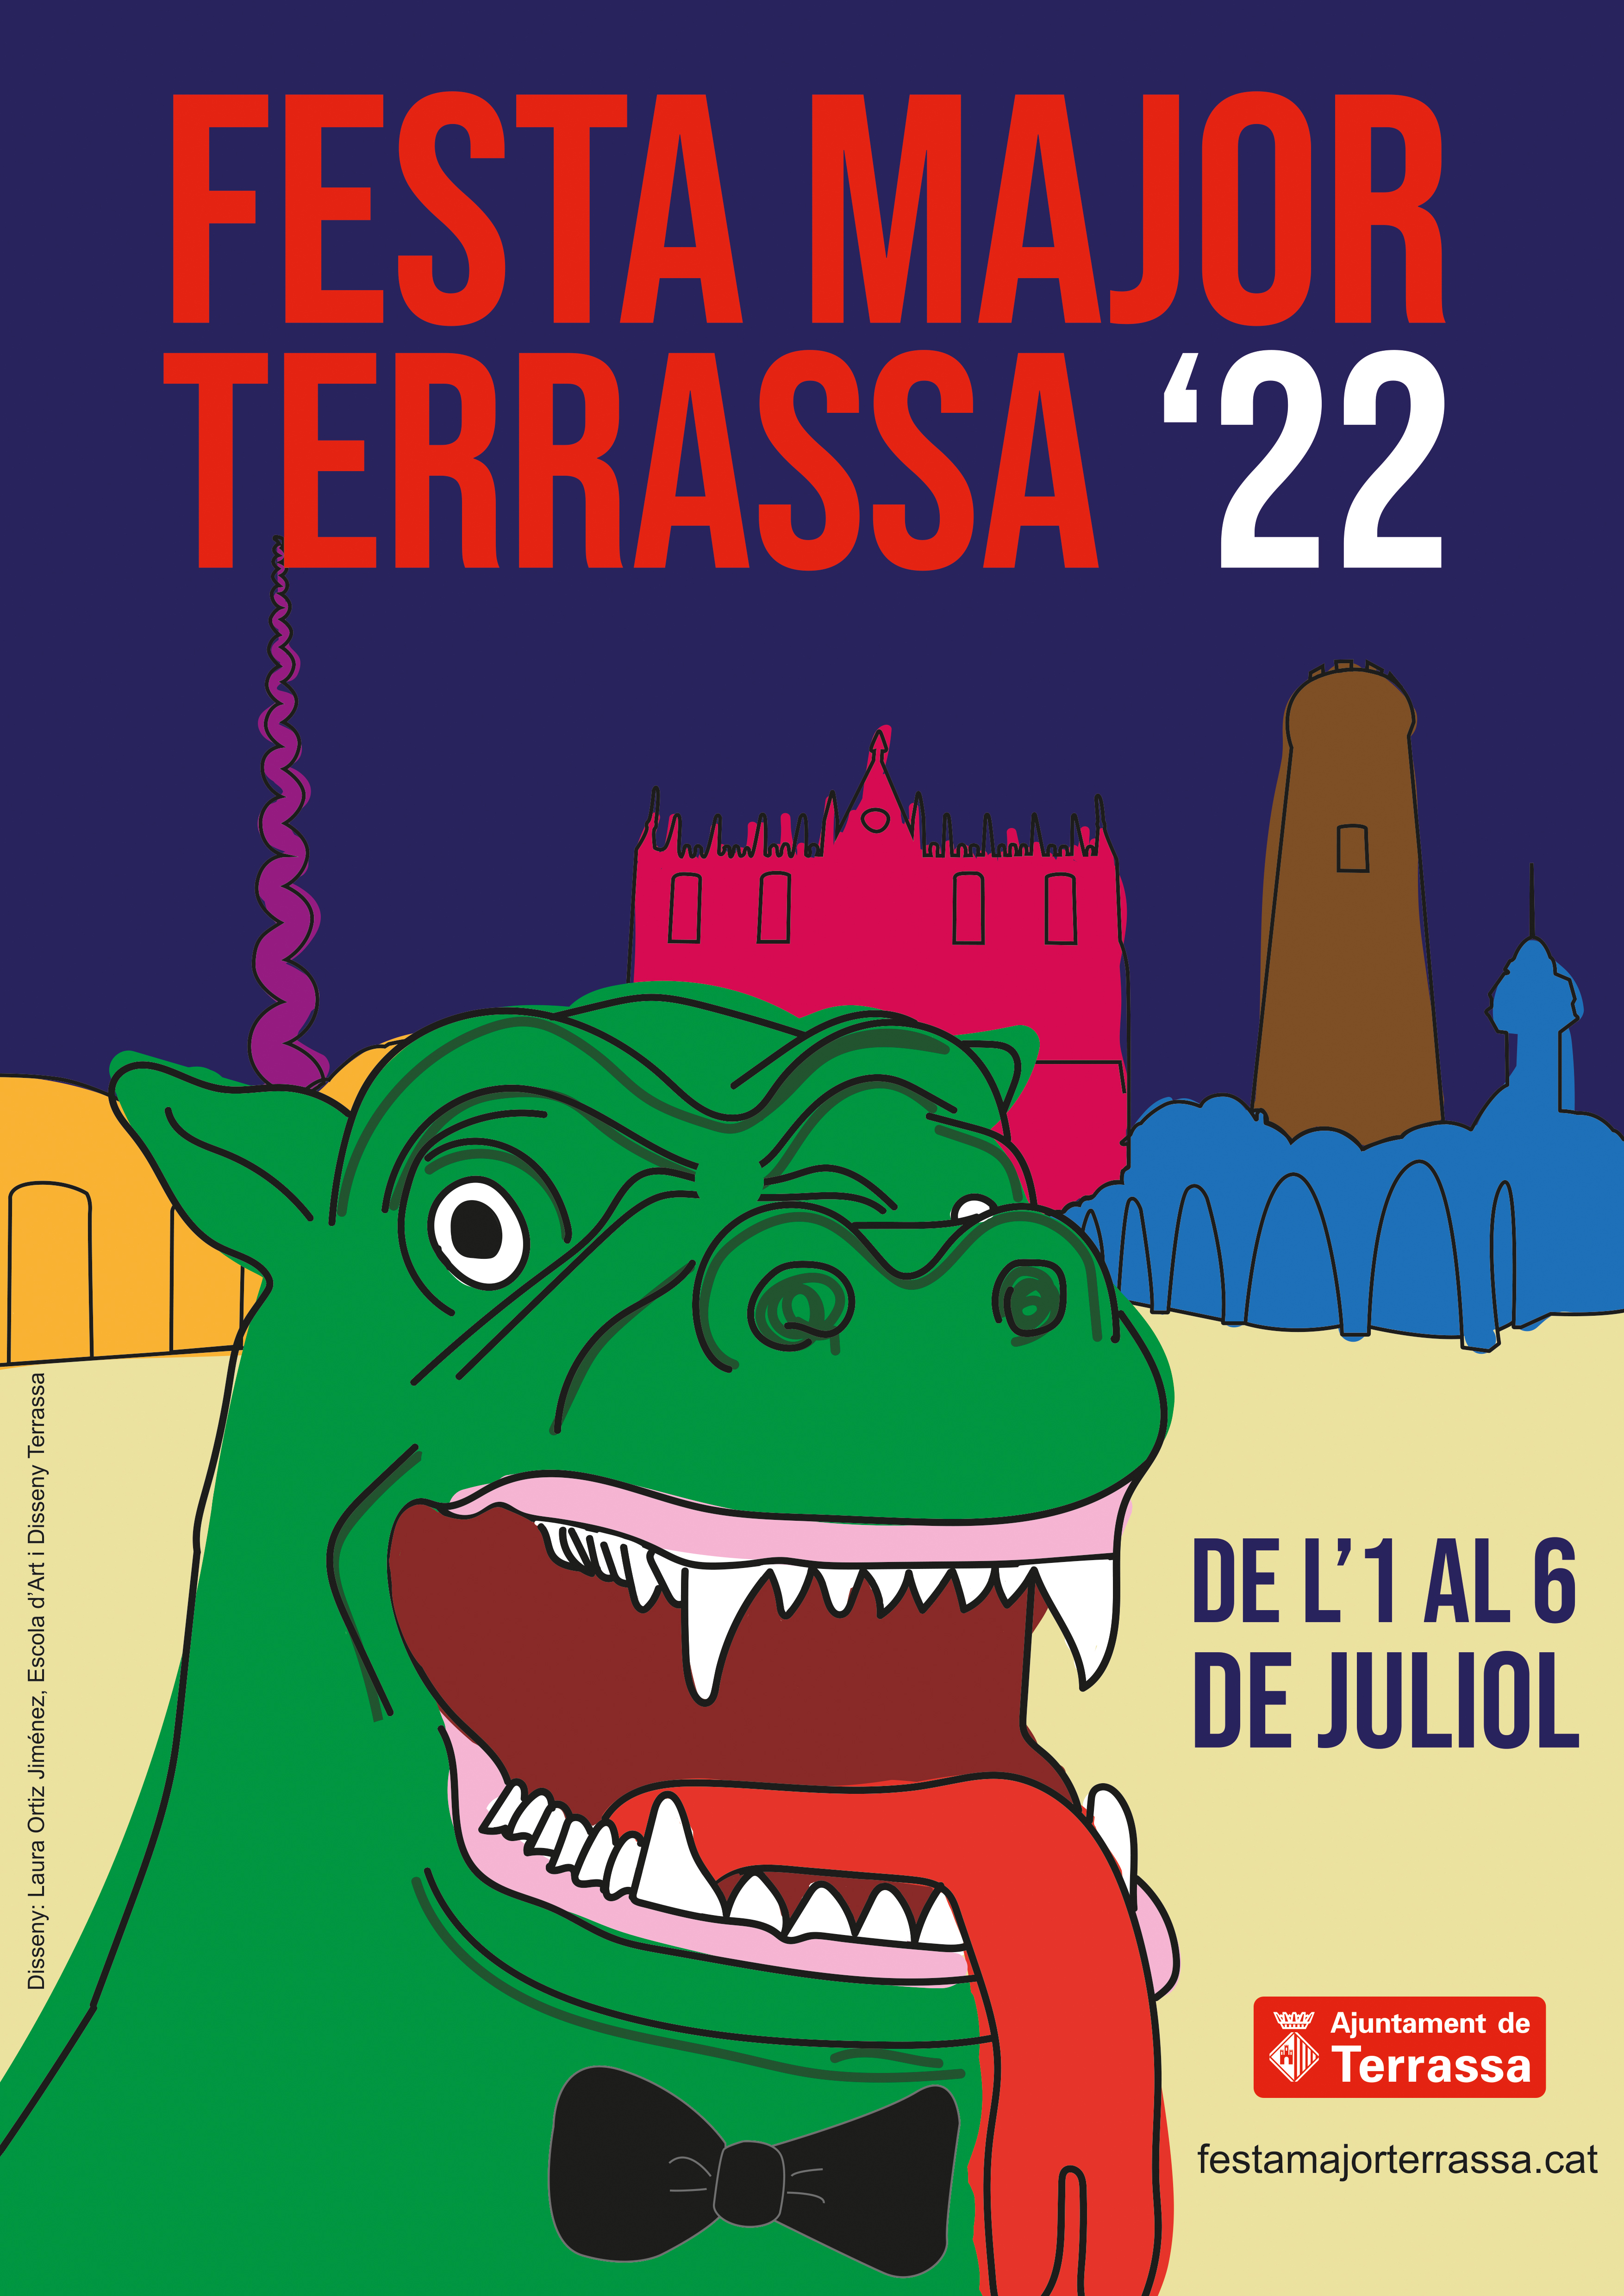 Cartel de la Fiesta Mayor. Autora: Laura Ortiz Jiménez